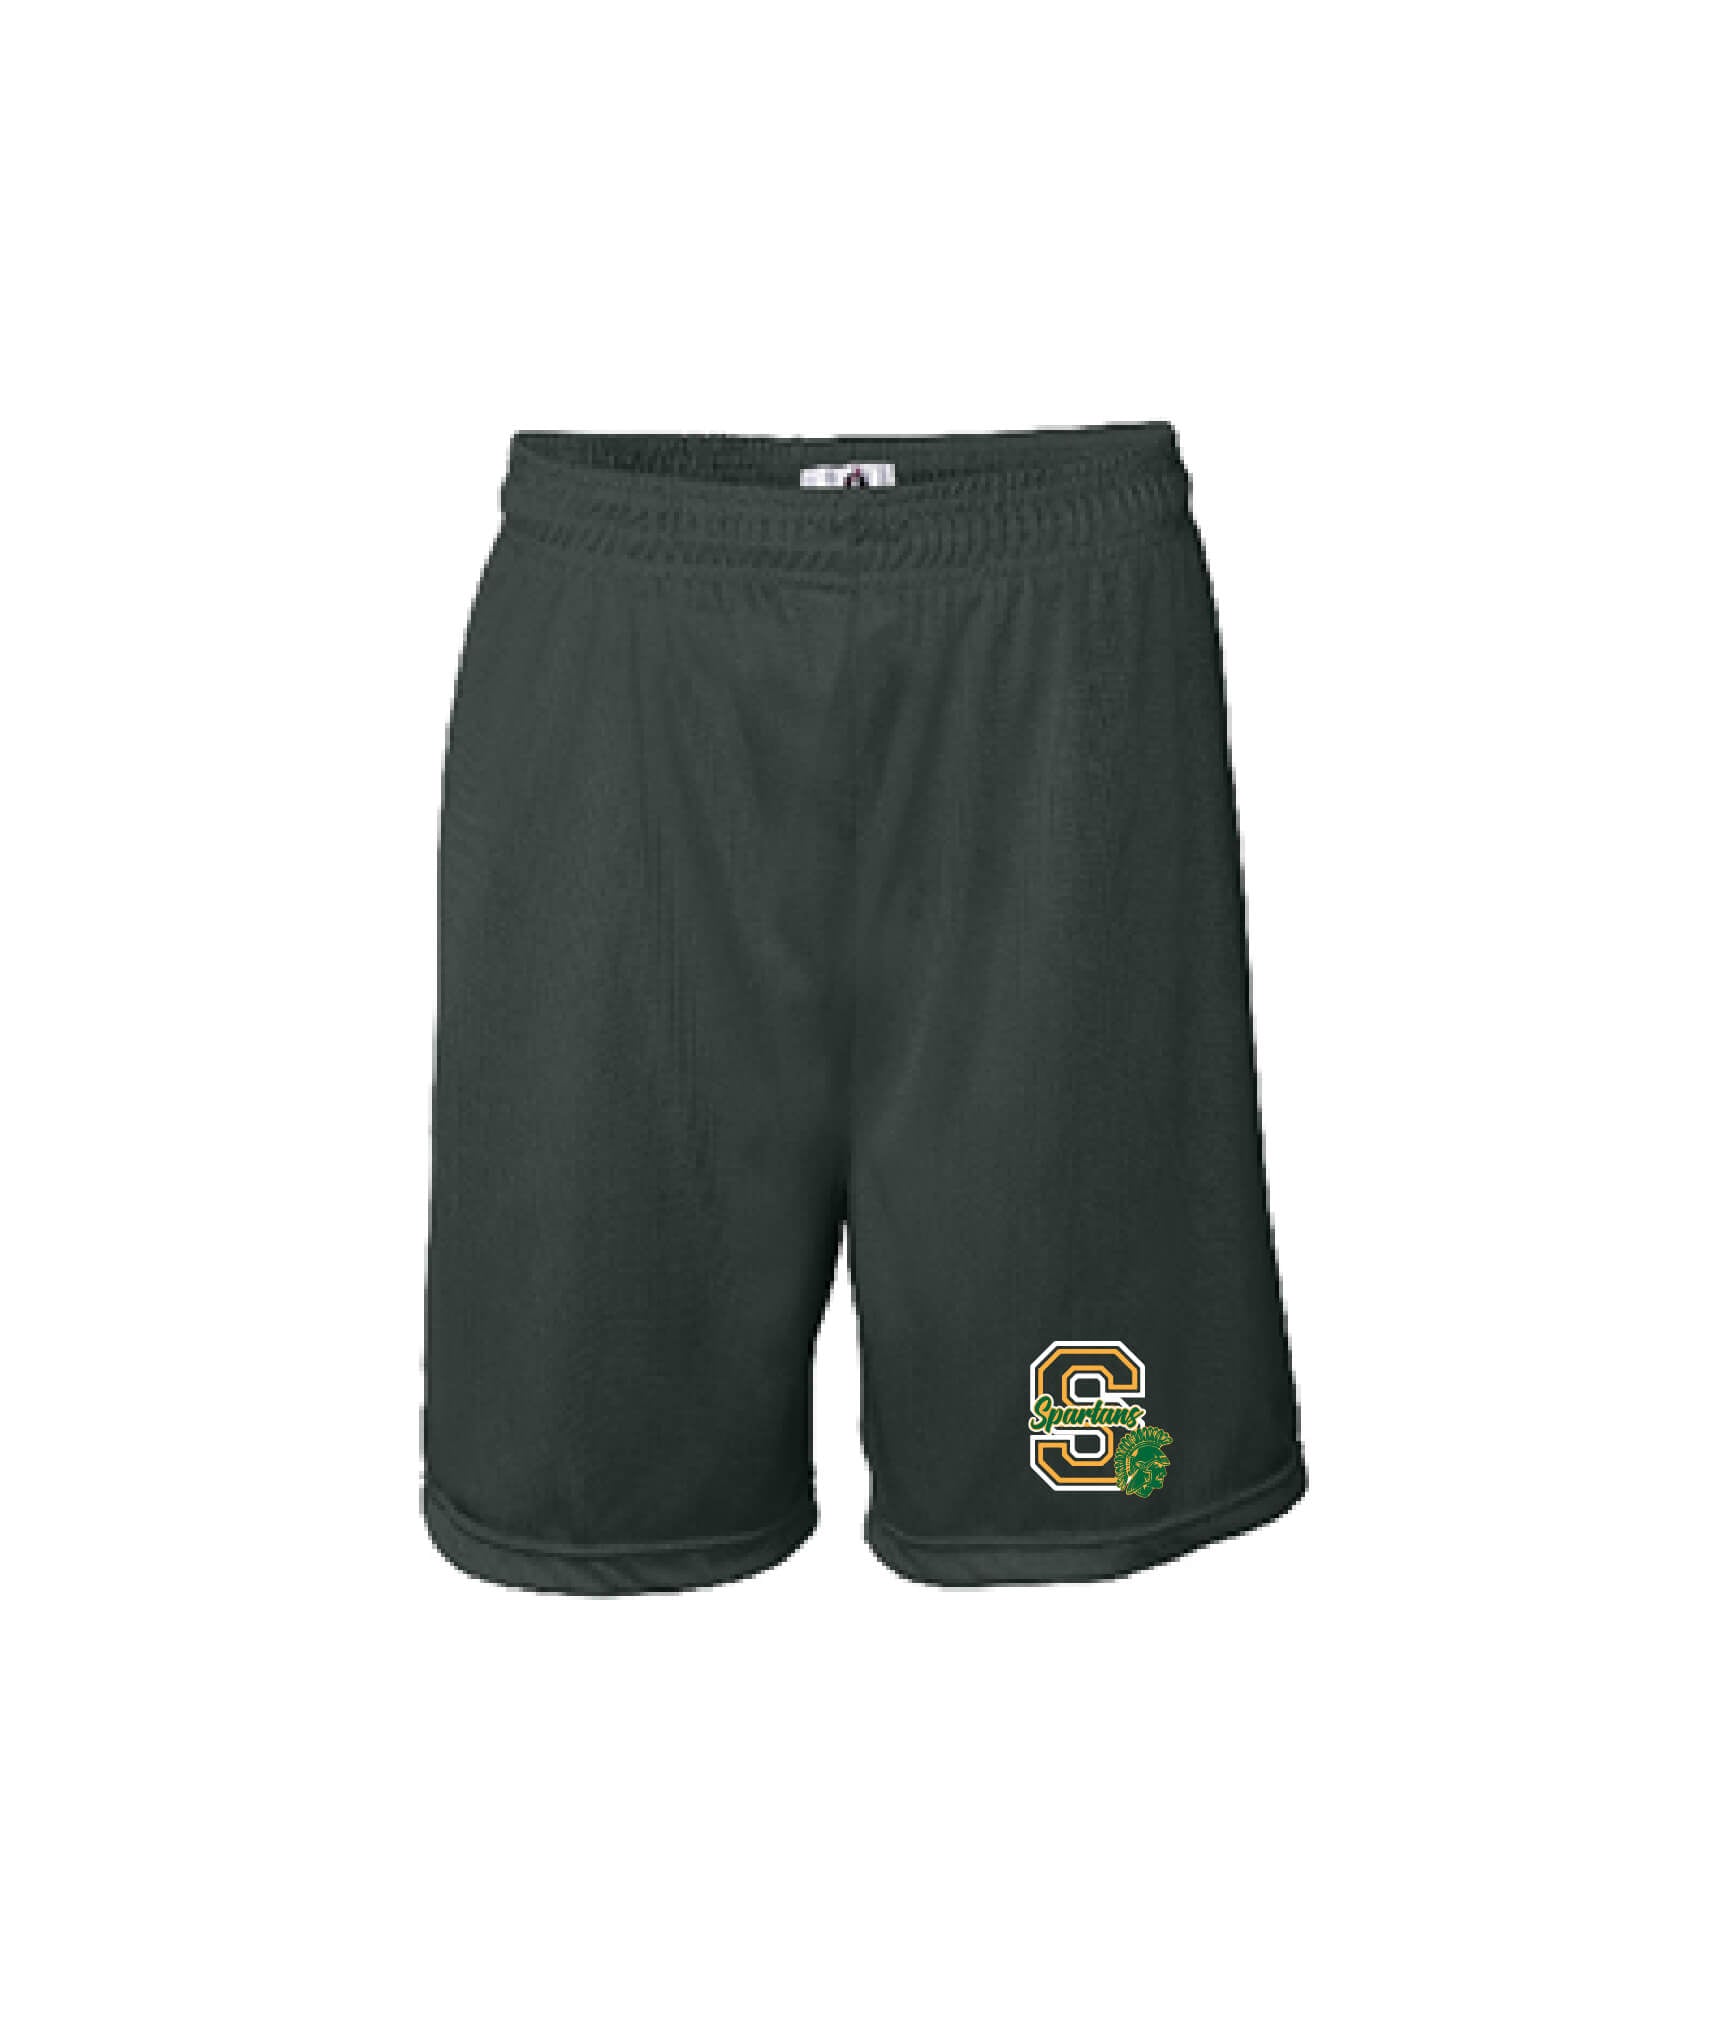 Badger Mini Mesh 7” Inseam Shorts Spartans S green